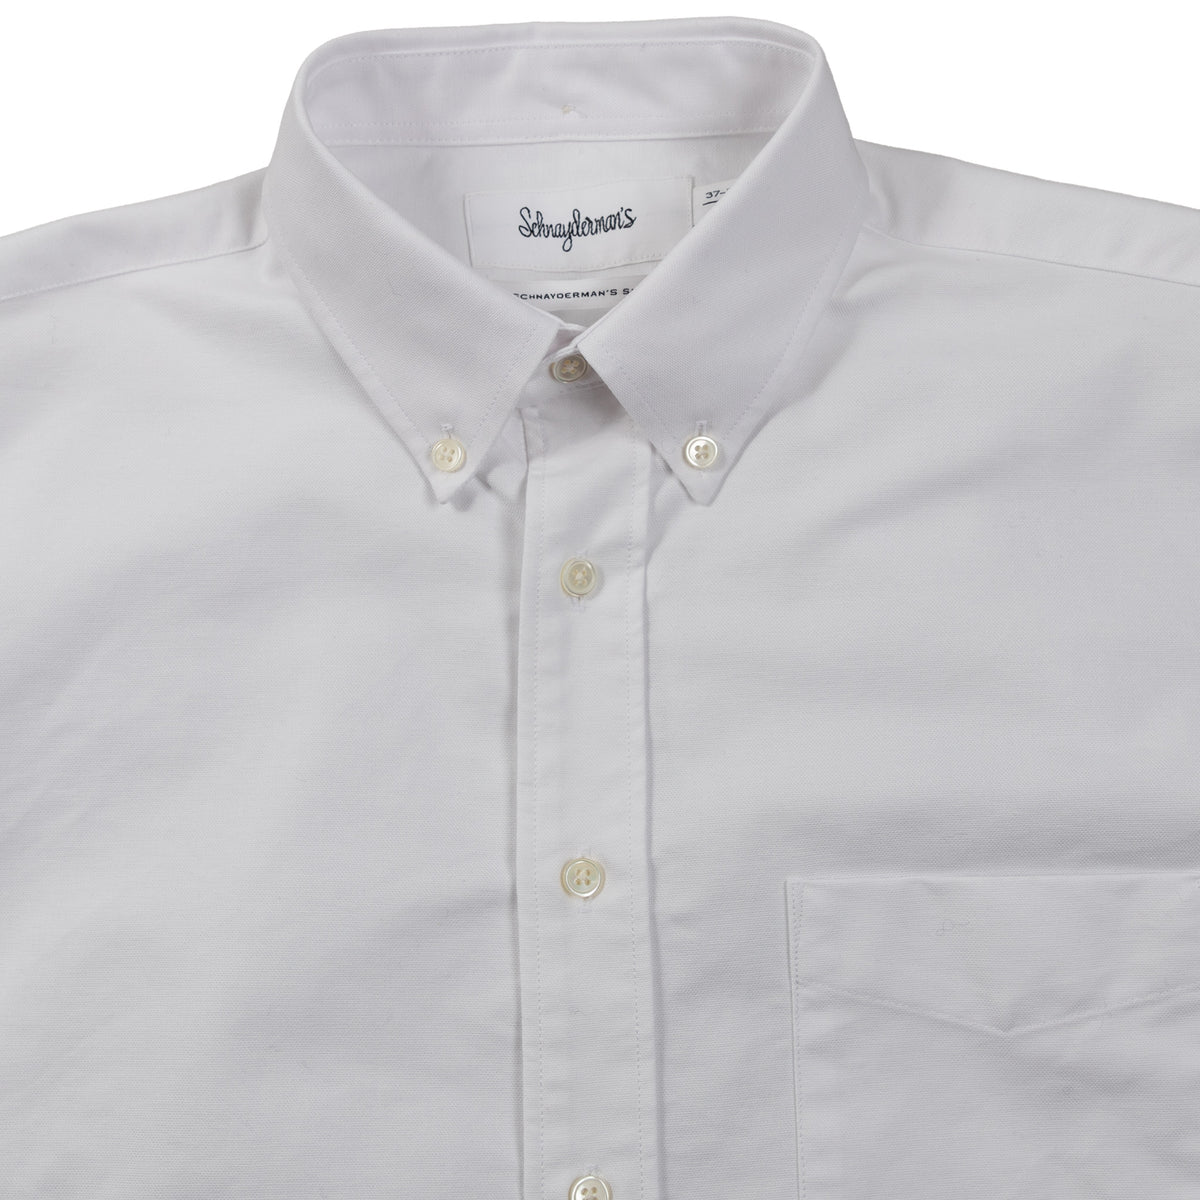 schnaydermans Shirt Oxford One button up white collar